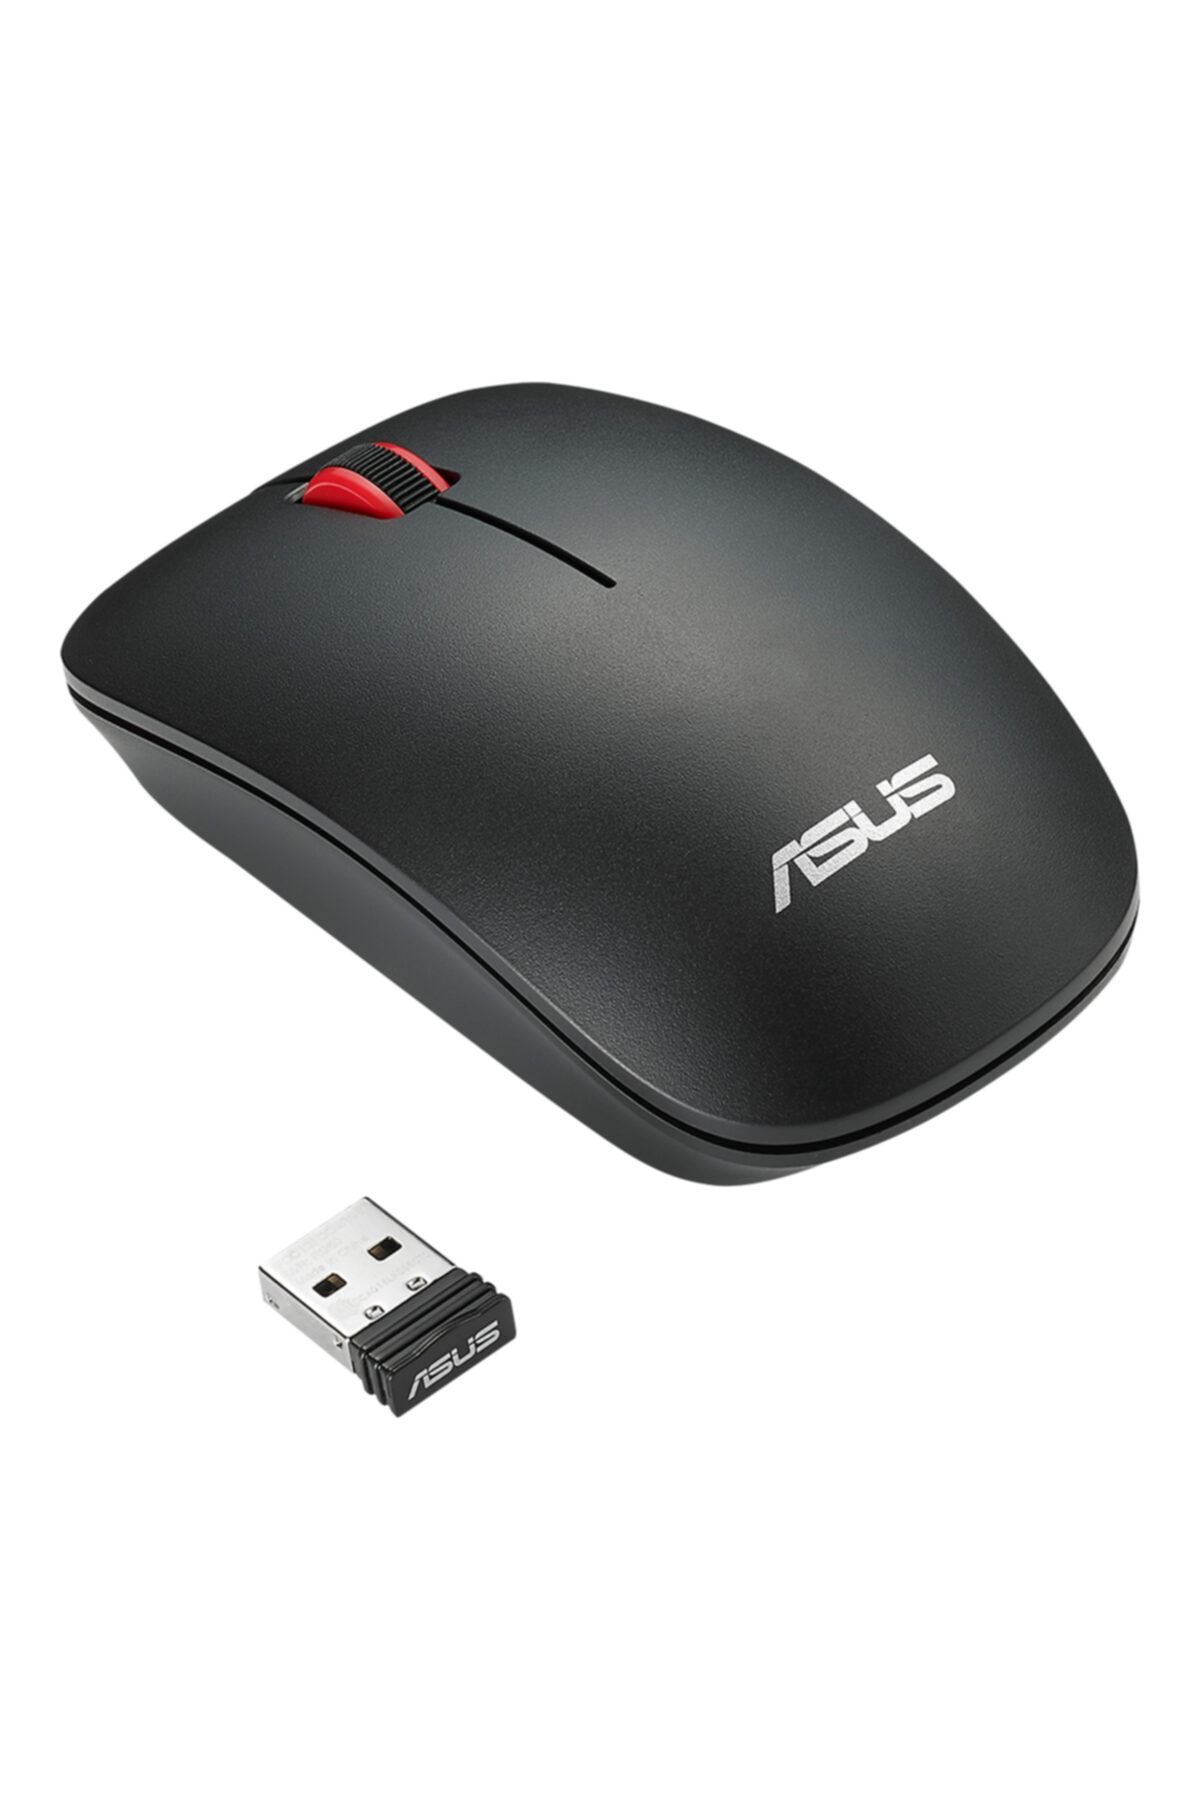 ASUS Wt300 Kablosuz Mouse Sıyah